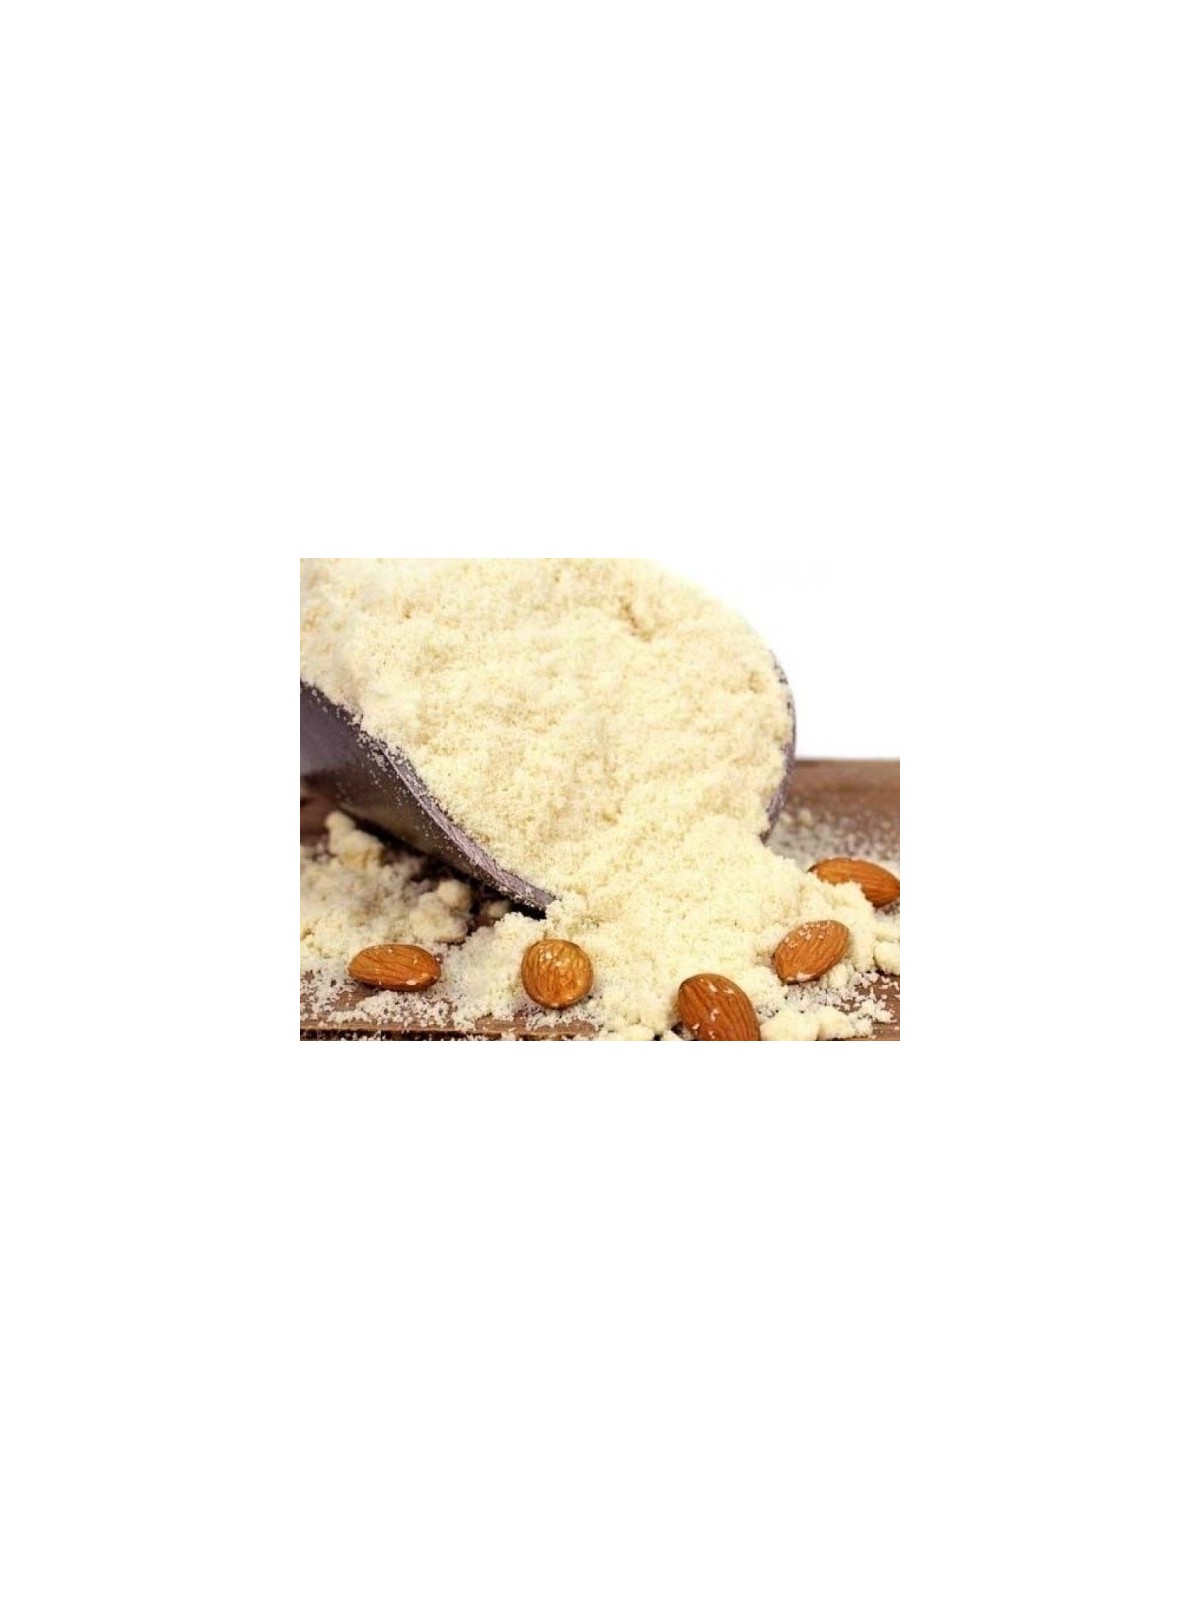 FINE Almond flour 100% - 200g